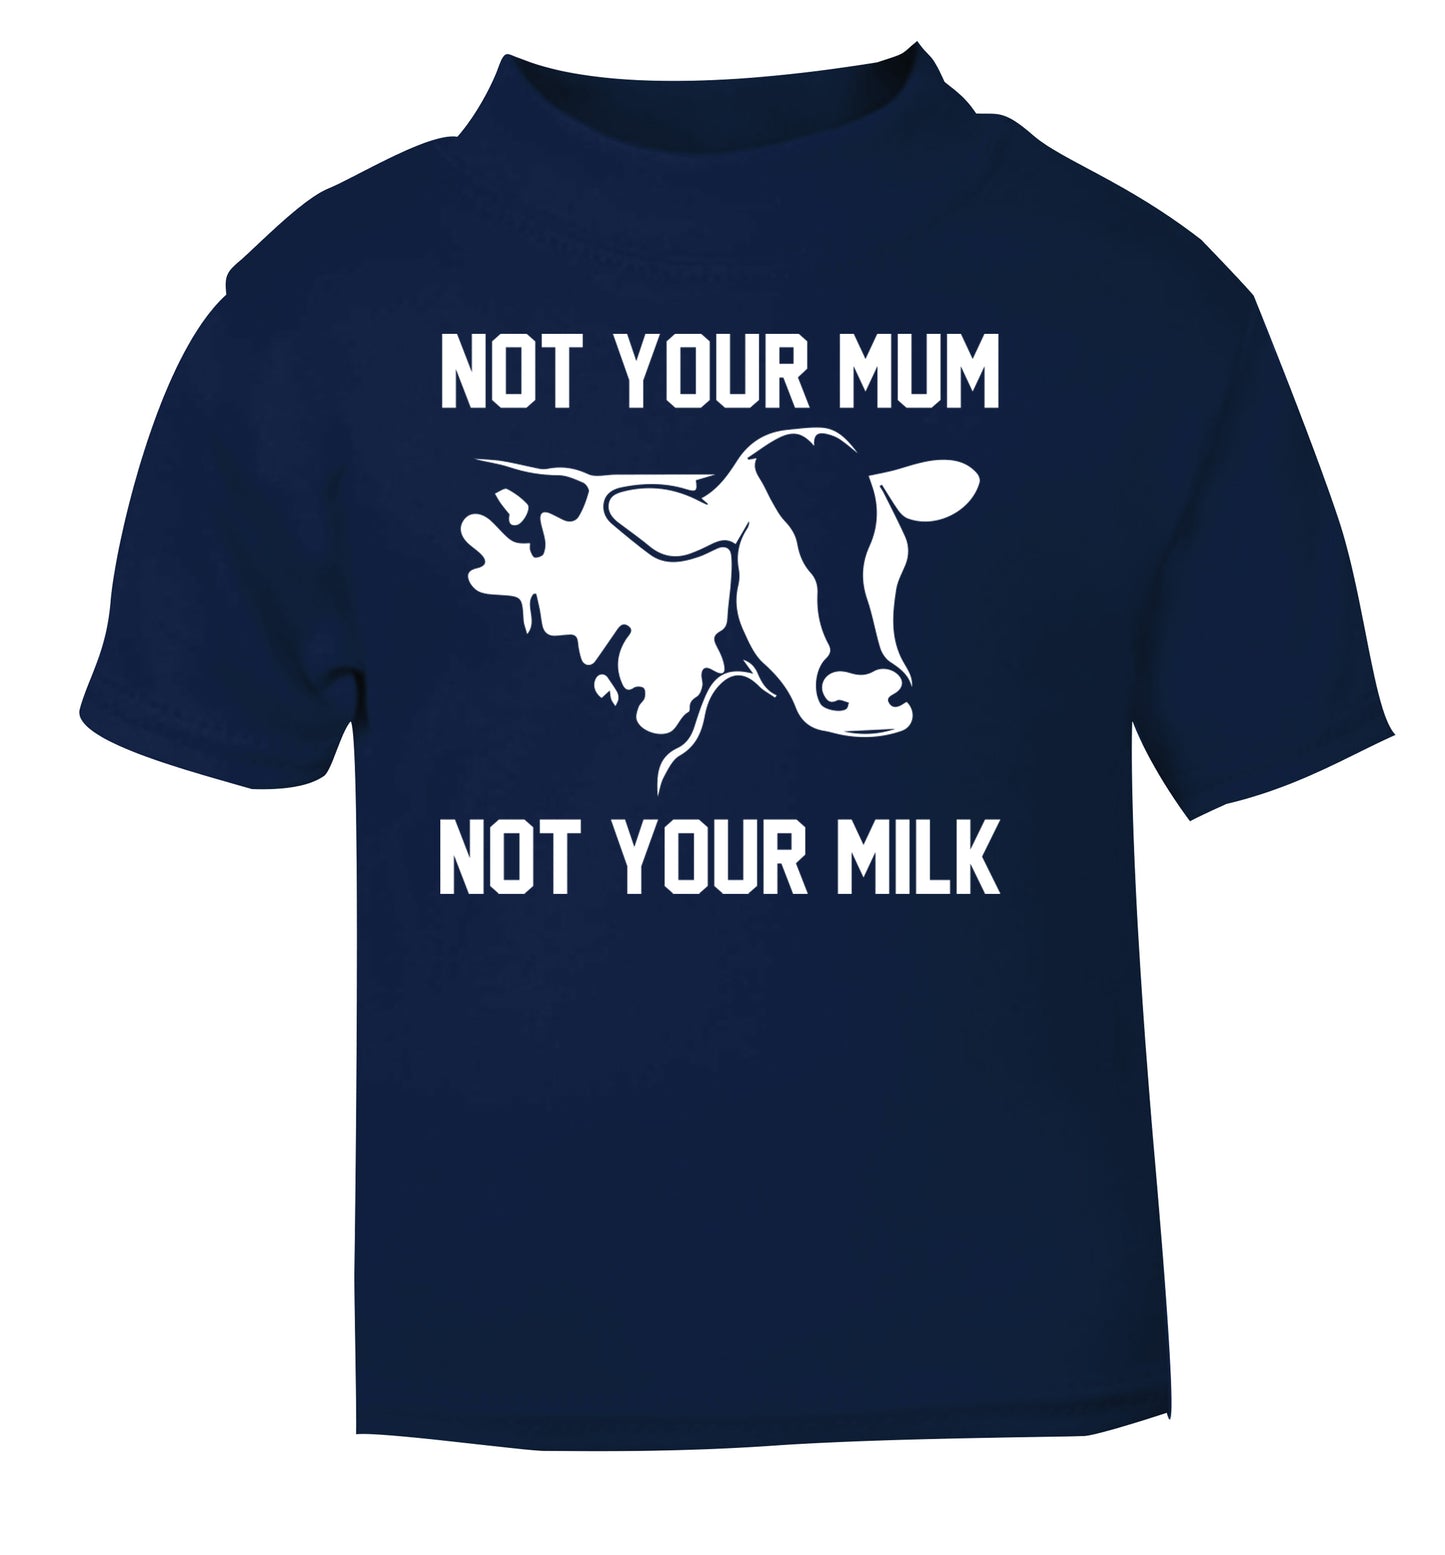 Not your mum not your milk navy Baby Toddler Tshirt 2 Years